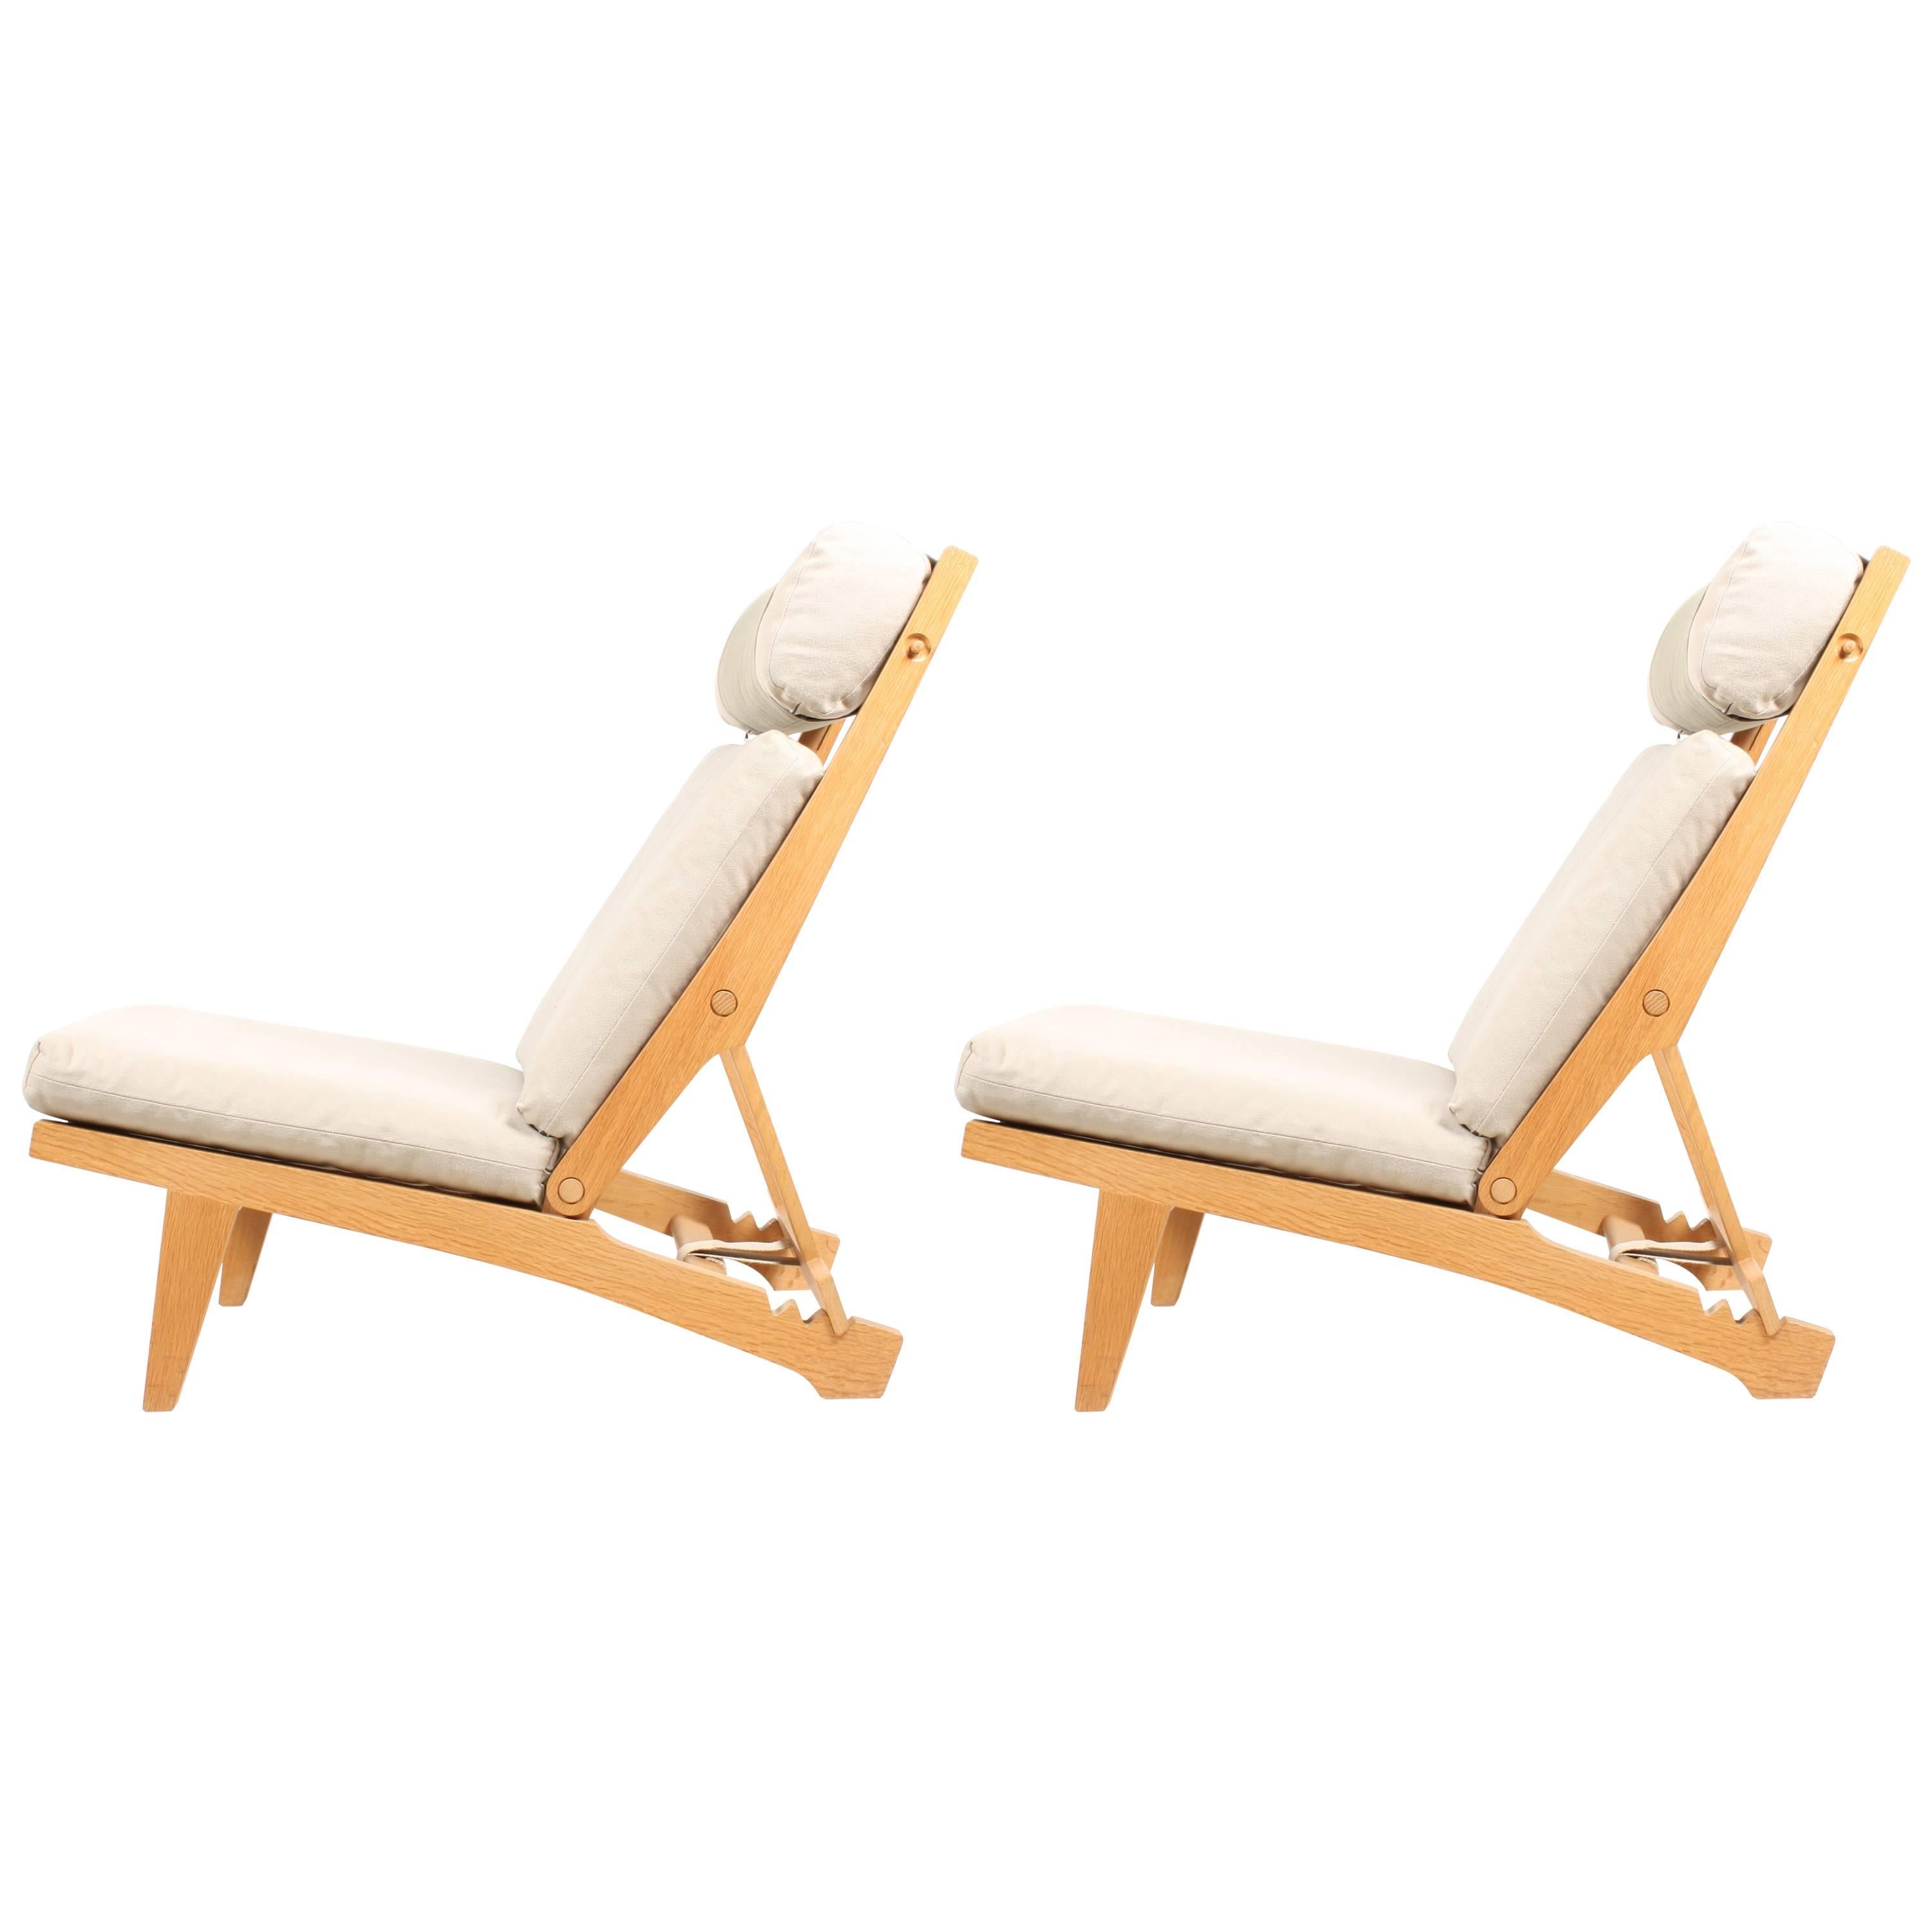 Pair of AP71 Folding Chairs by Wegner